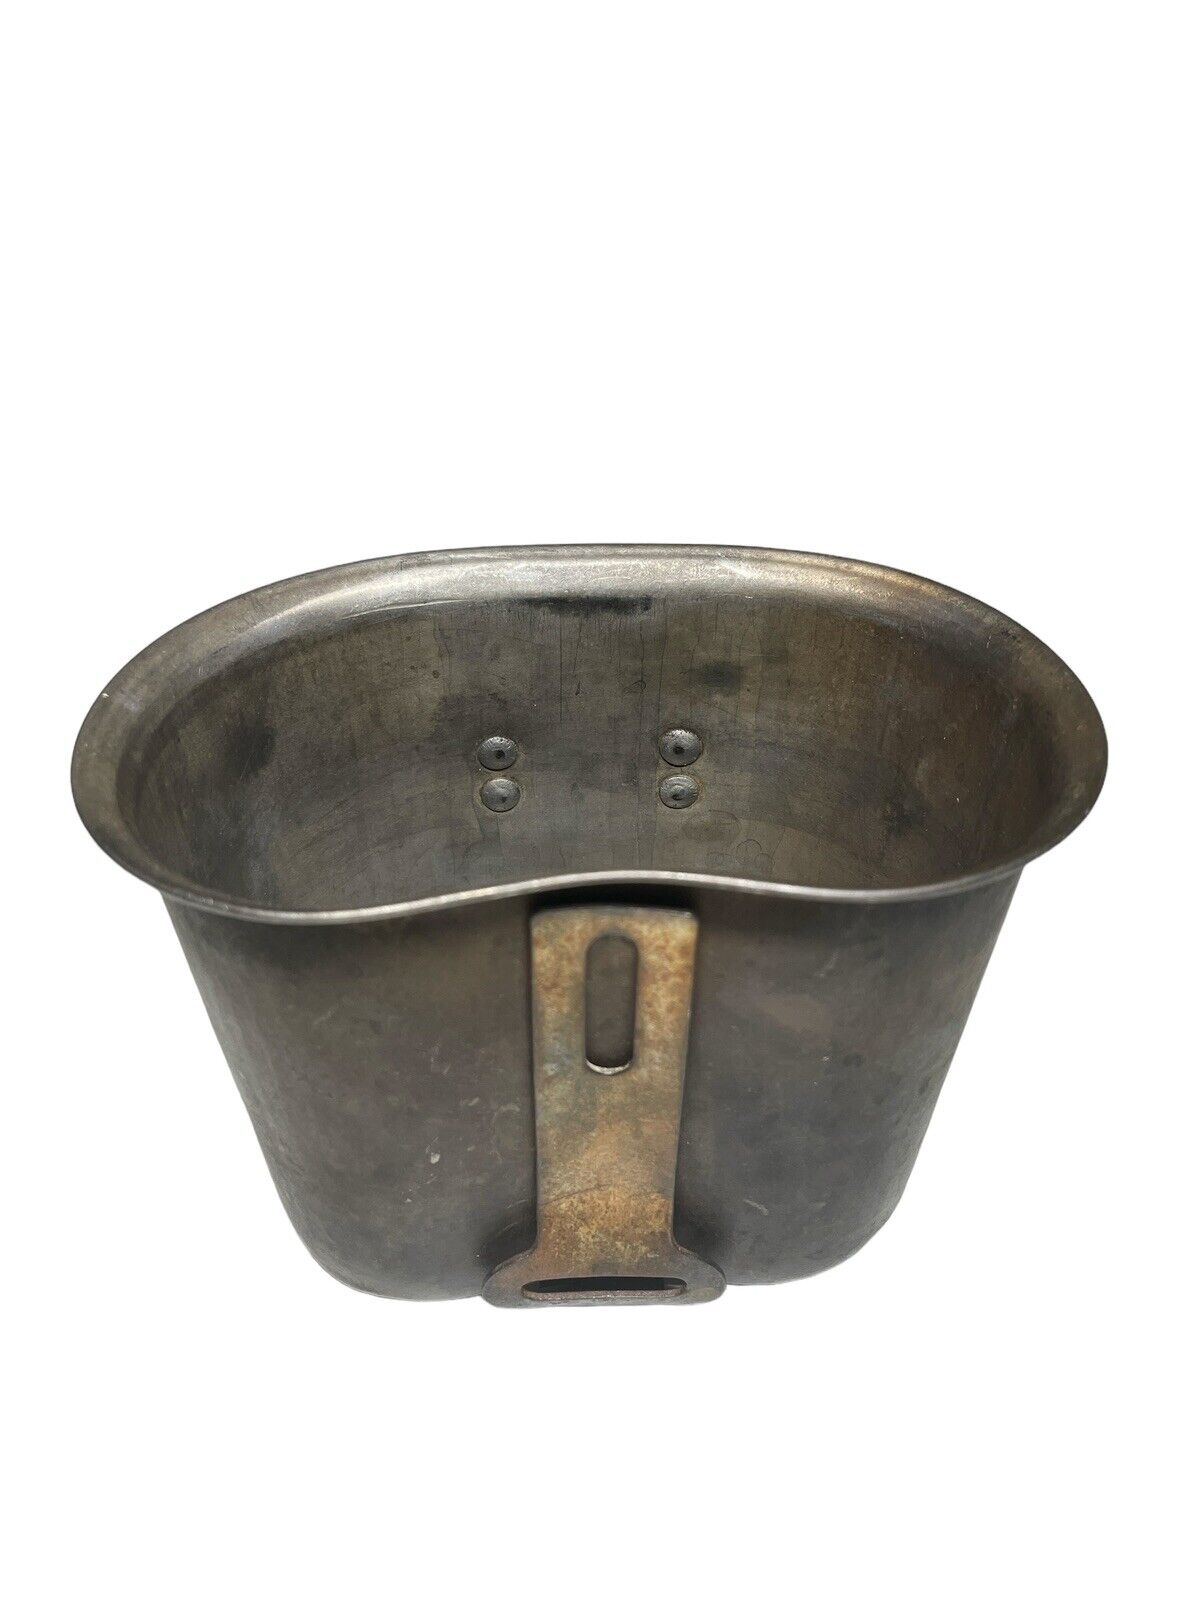 WW2 Canteen Cup, NOS KM Co. 1944